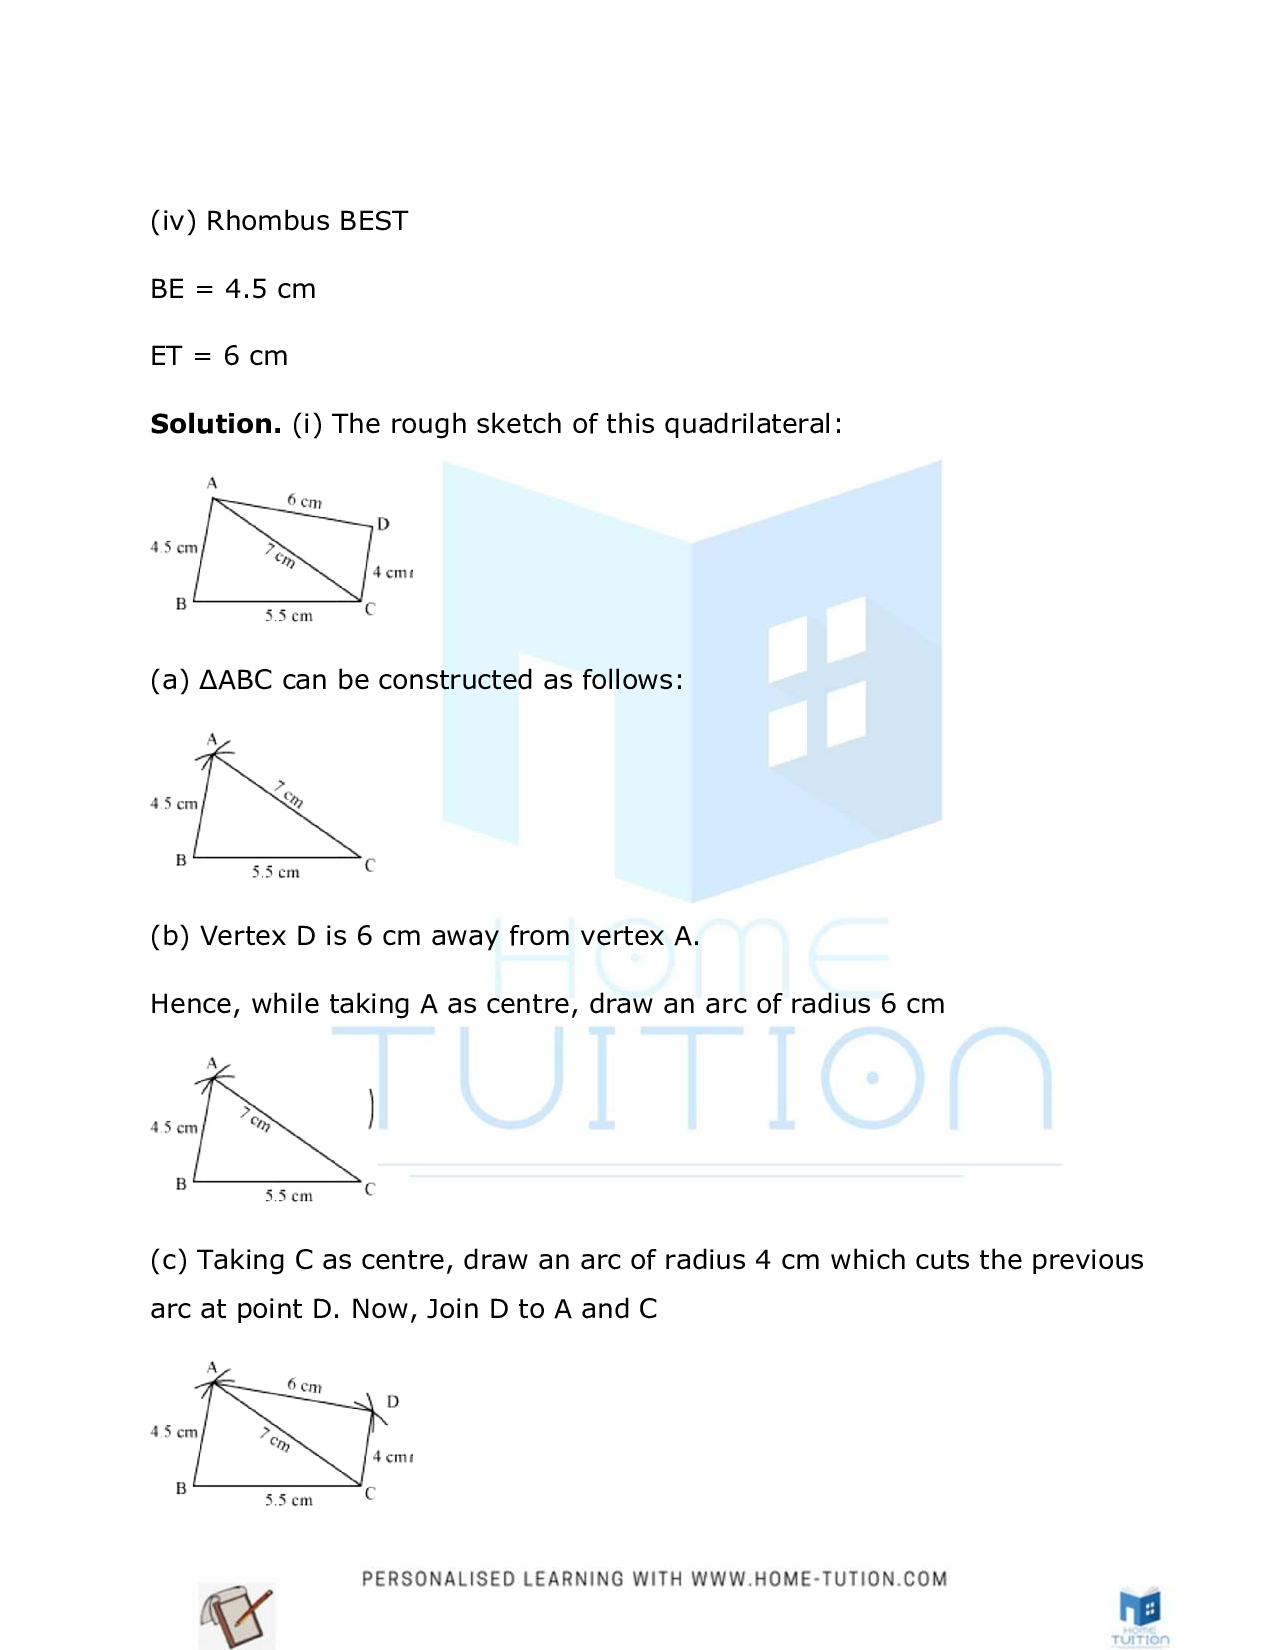 Class 8 Maths Chapter 4 Practical Geometry